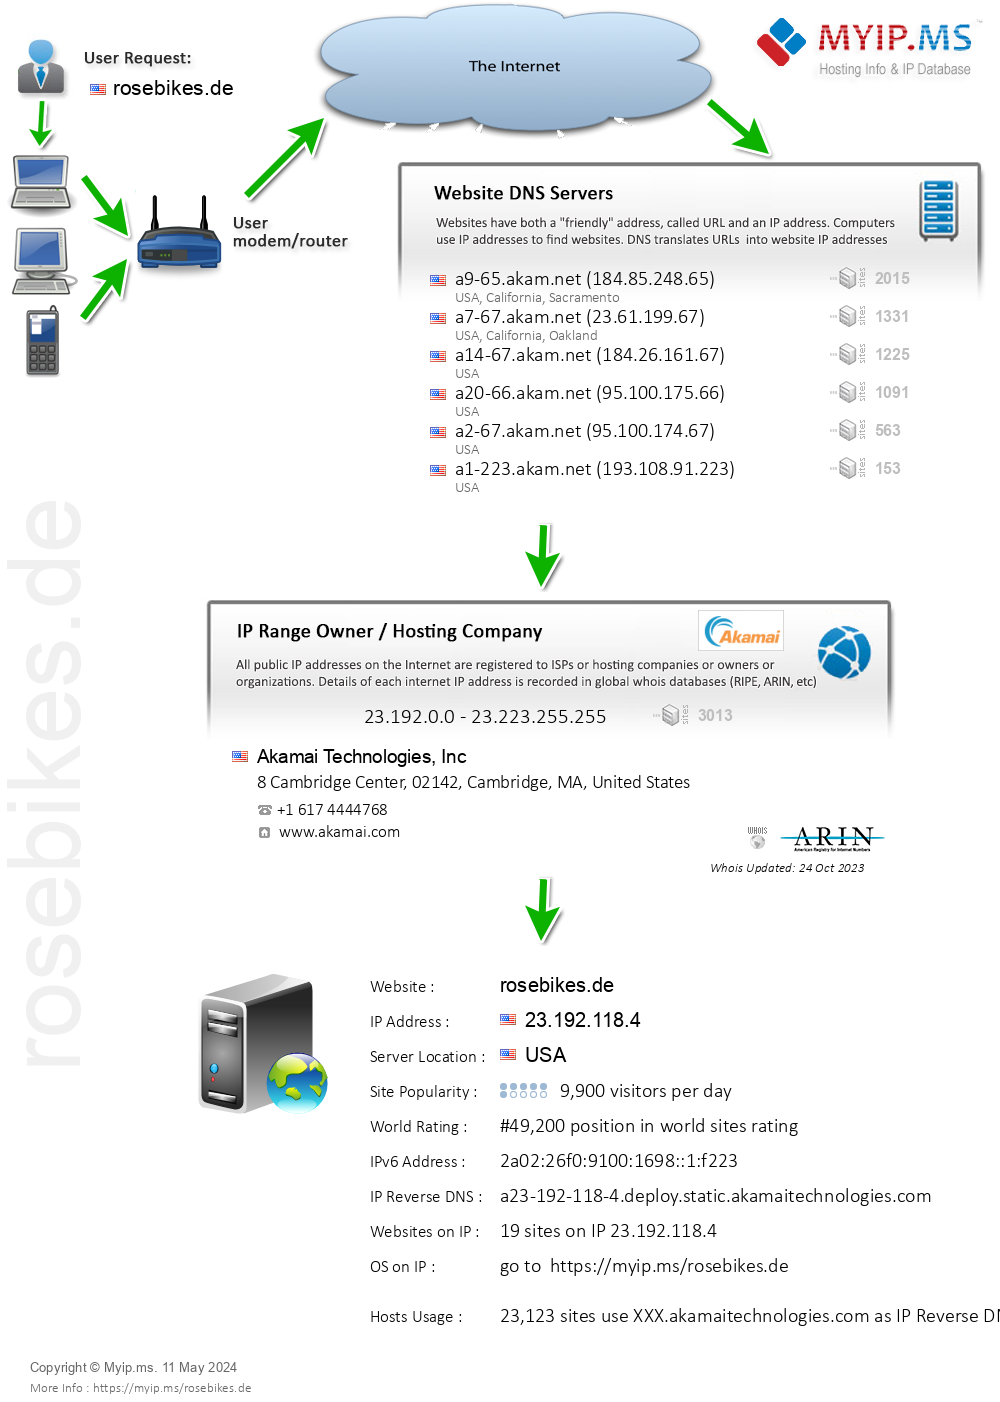 Rosebikes.de - Website Hosting Visual IP Diagram